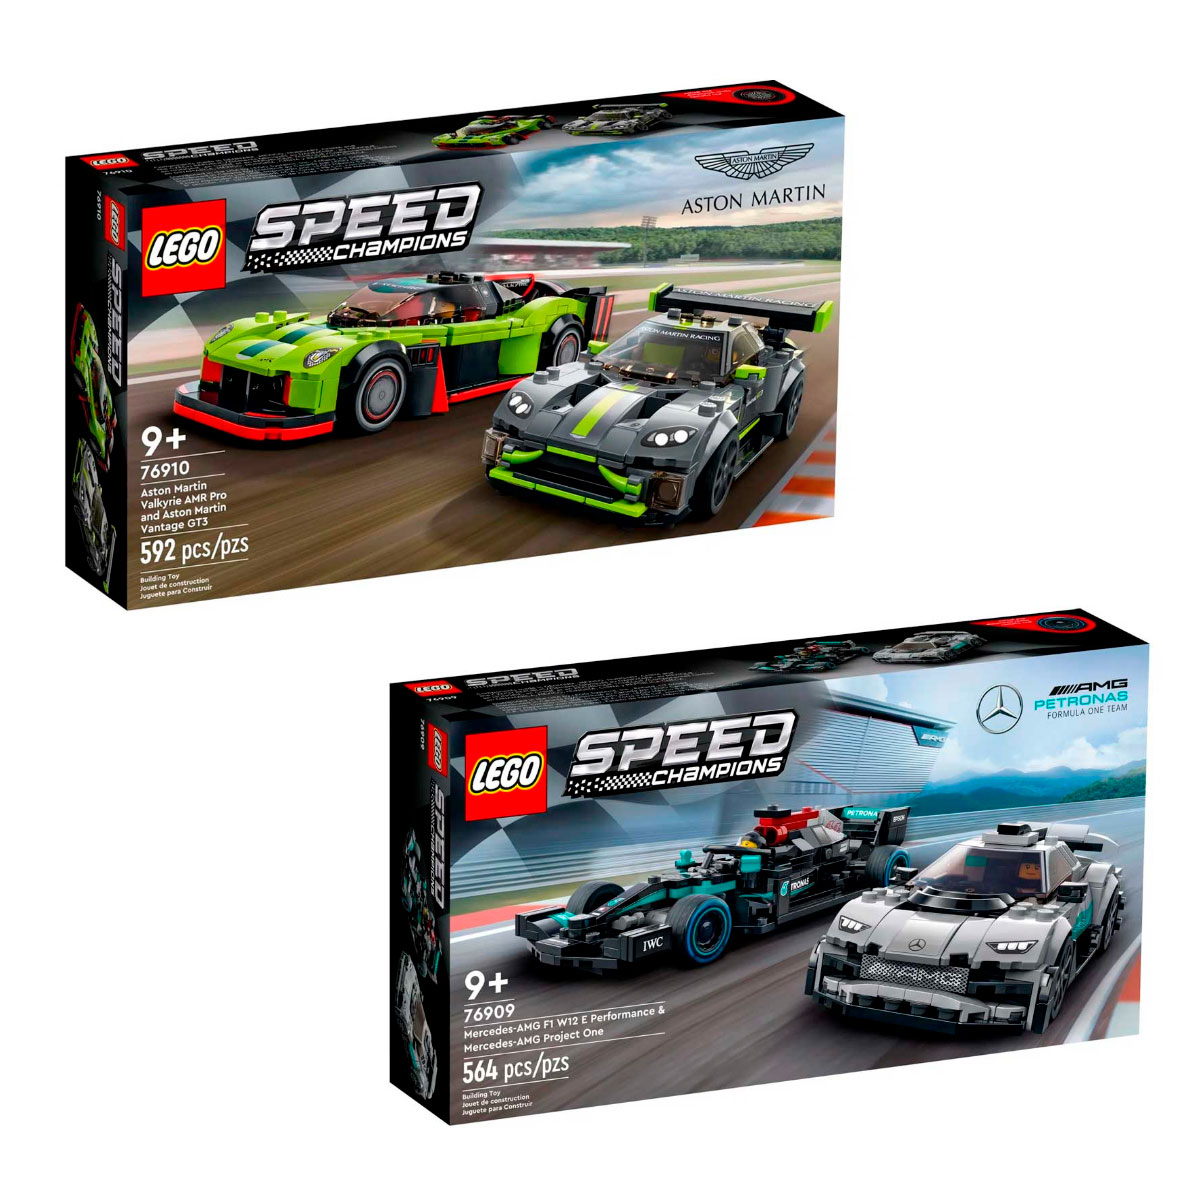 Conjunto LEGO Speed Champions - Mercedes-AMG F1 W12 E Performance e Mercedes-AMG Project One + Aston Martin Valkyrie AMR Pro e Aston Martin Vantage GT3